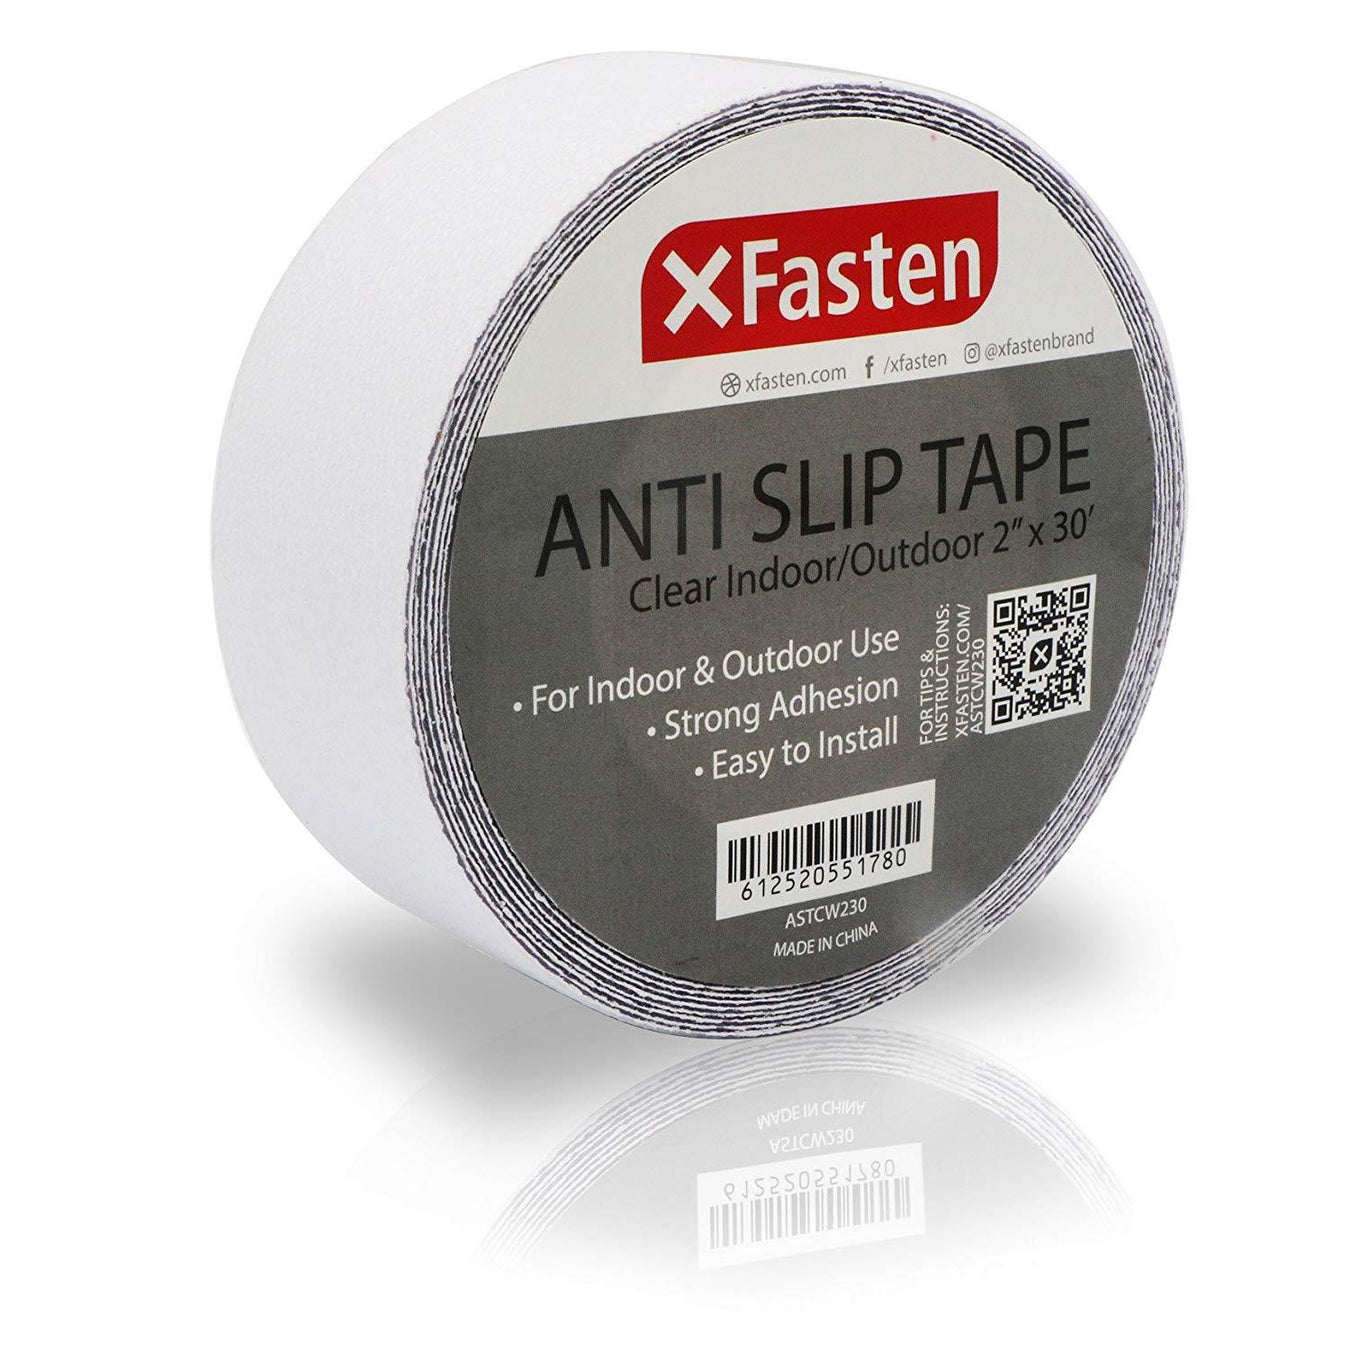 Anti Slip Tape - XFasten